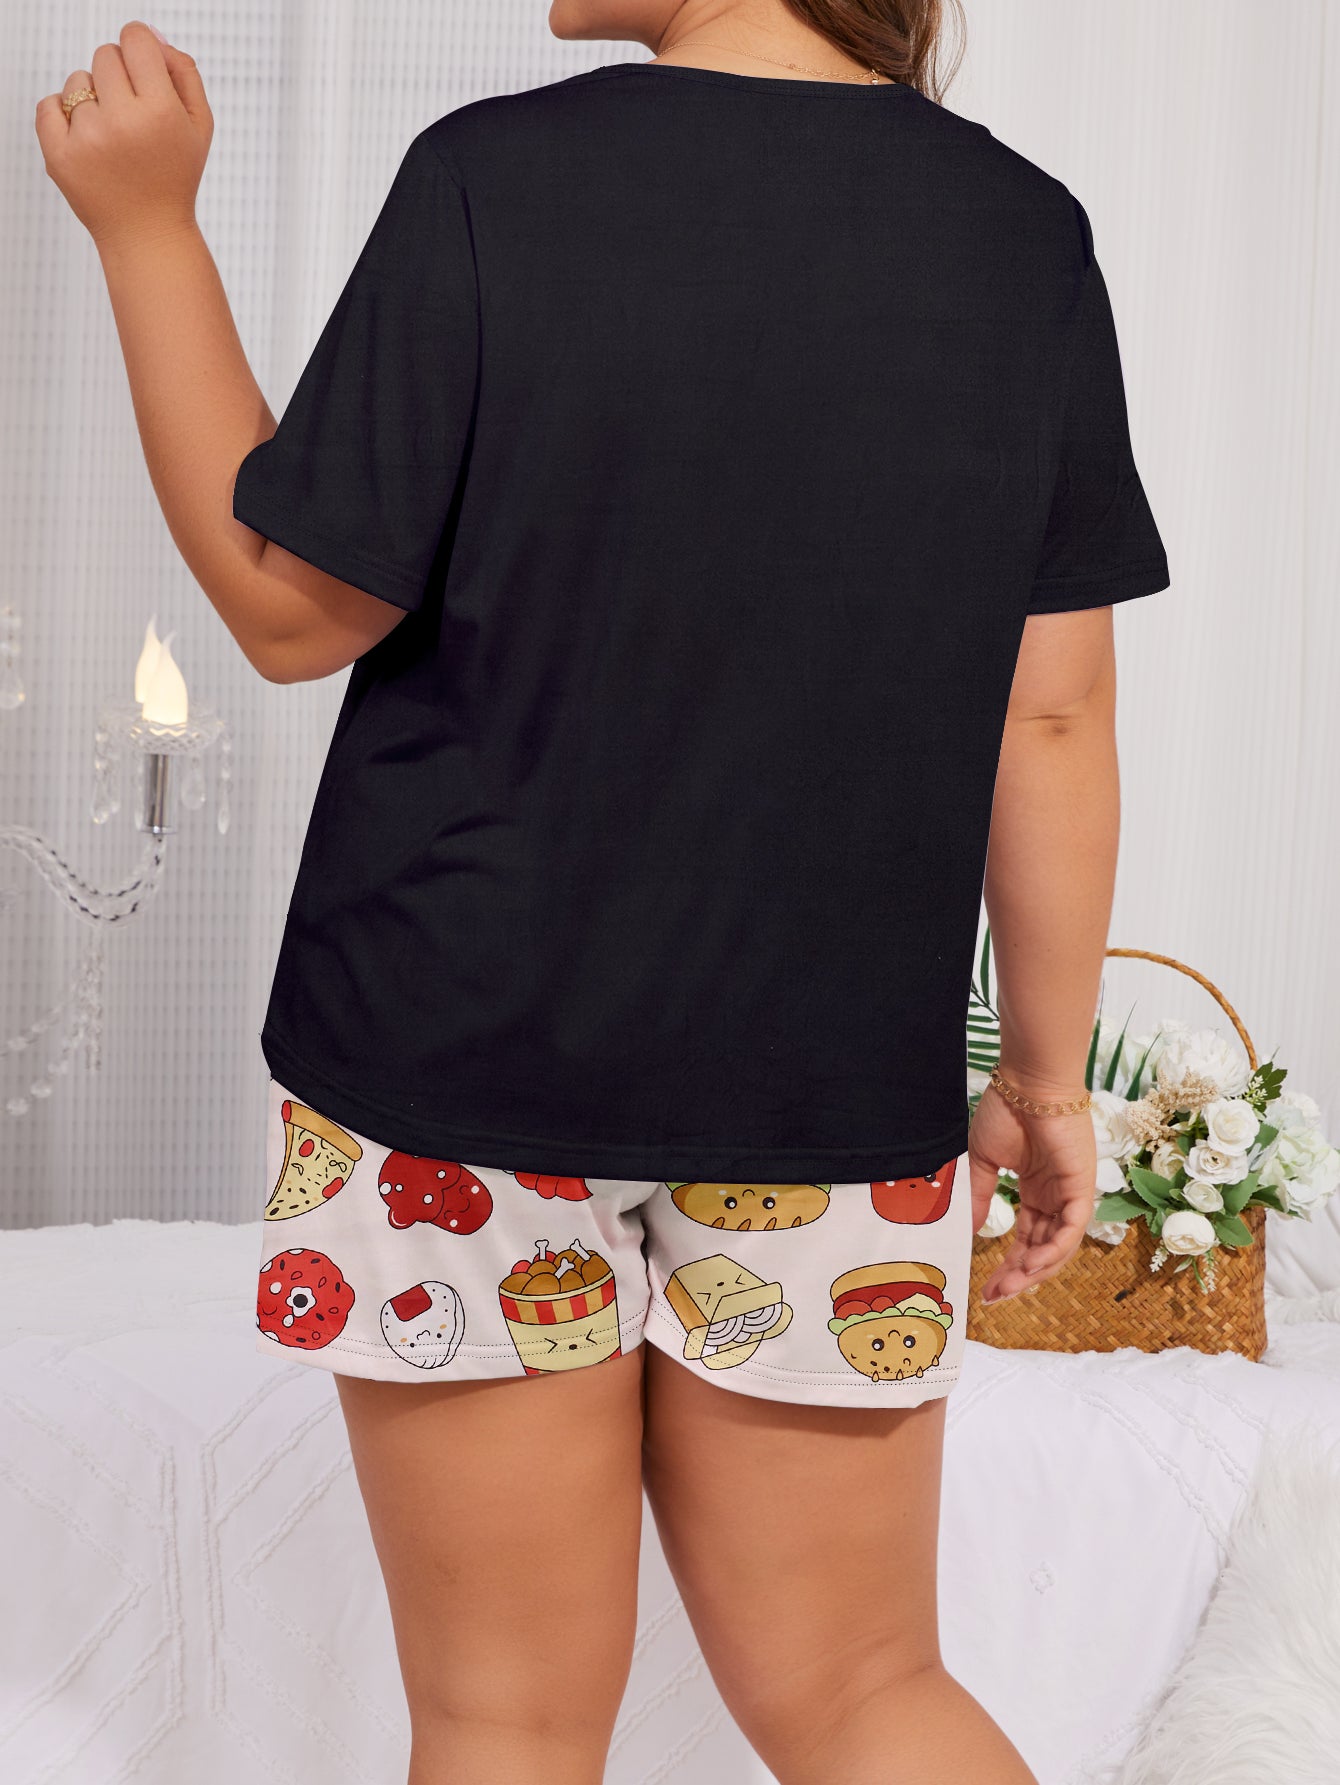 Women's Casual Pajama Set, Plus Size Fast Food Print Short Sleeve Round Neck Top & Shorts Sleepwear Two Piece Set